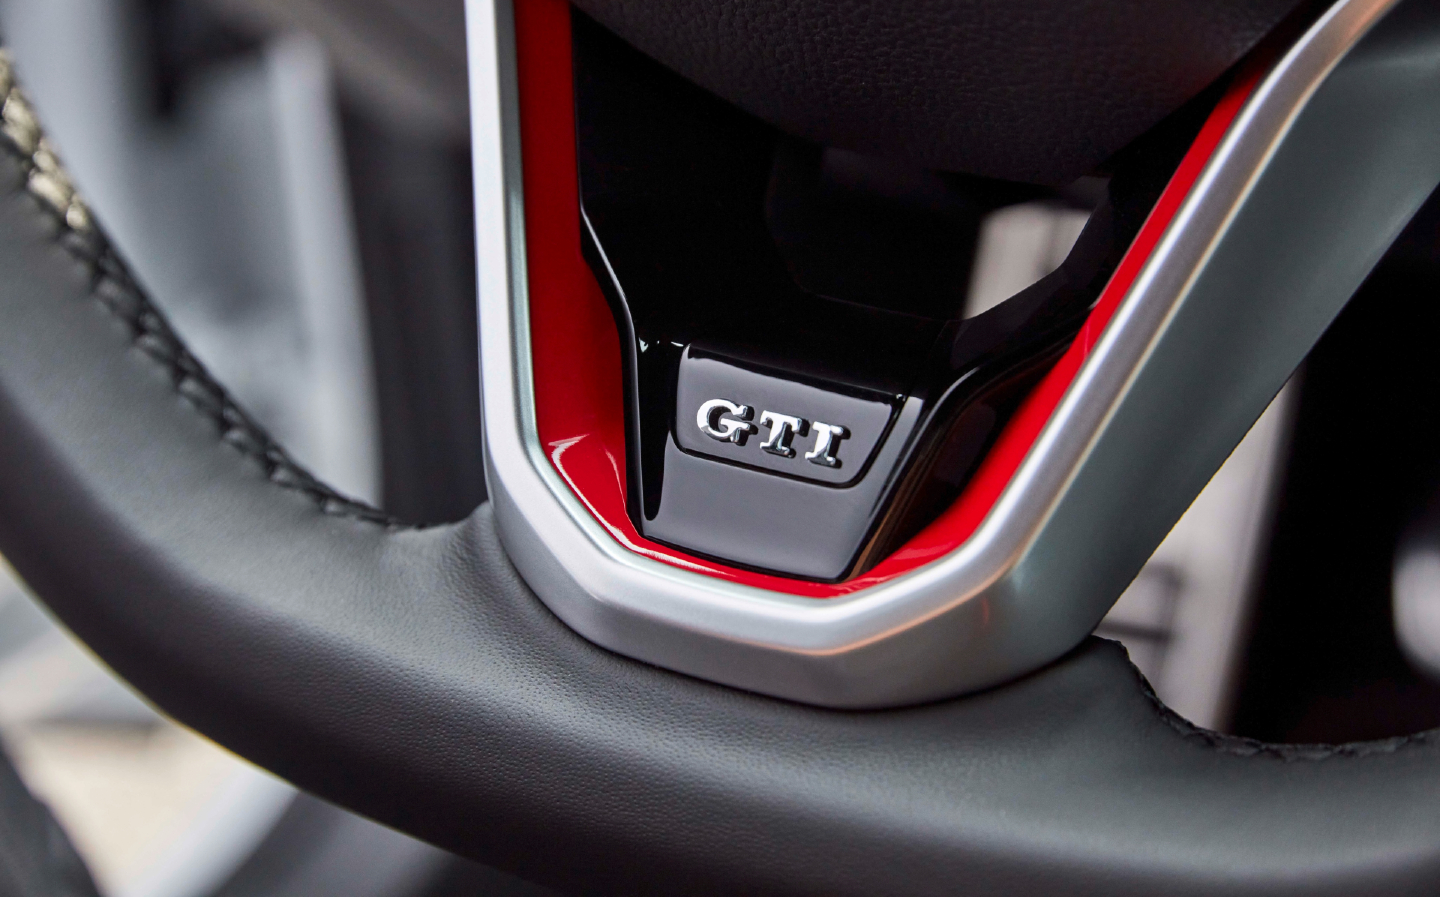 Volkswagen plans one last hurrah for petrol power in its legendary Golf GTI